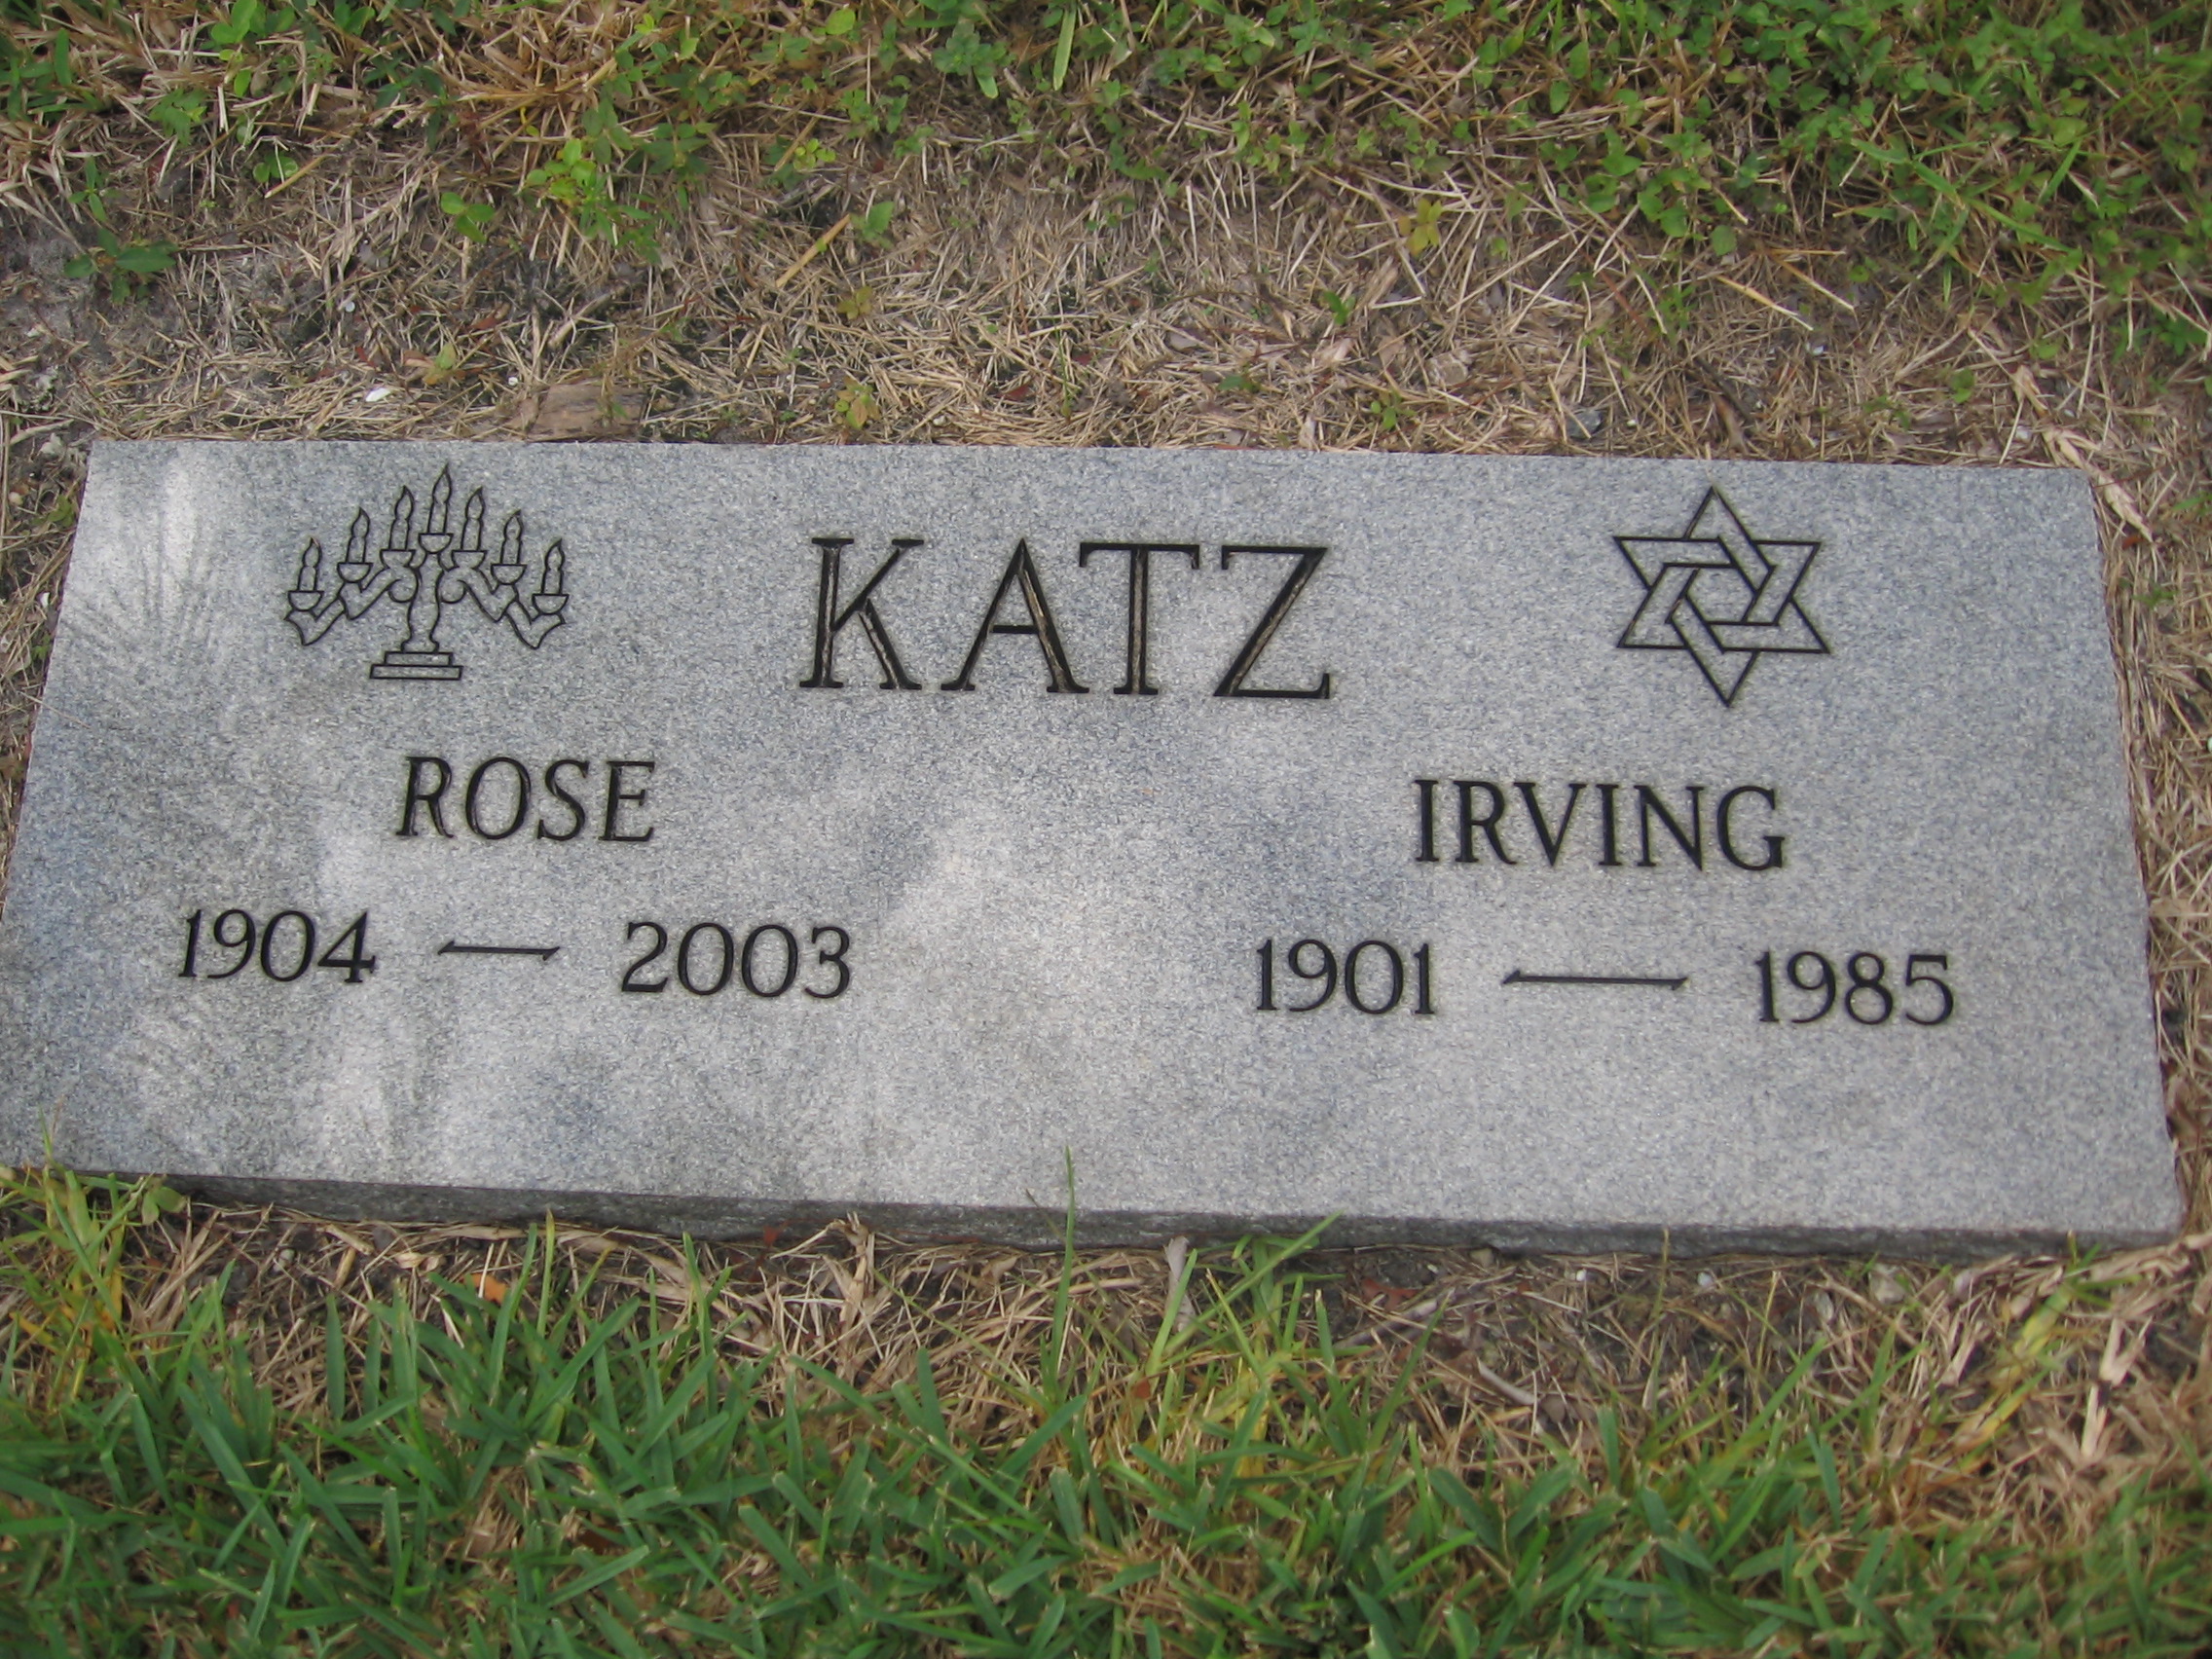 Irving Katz